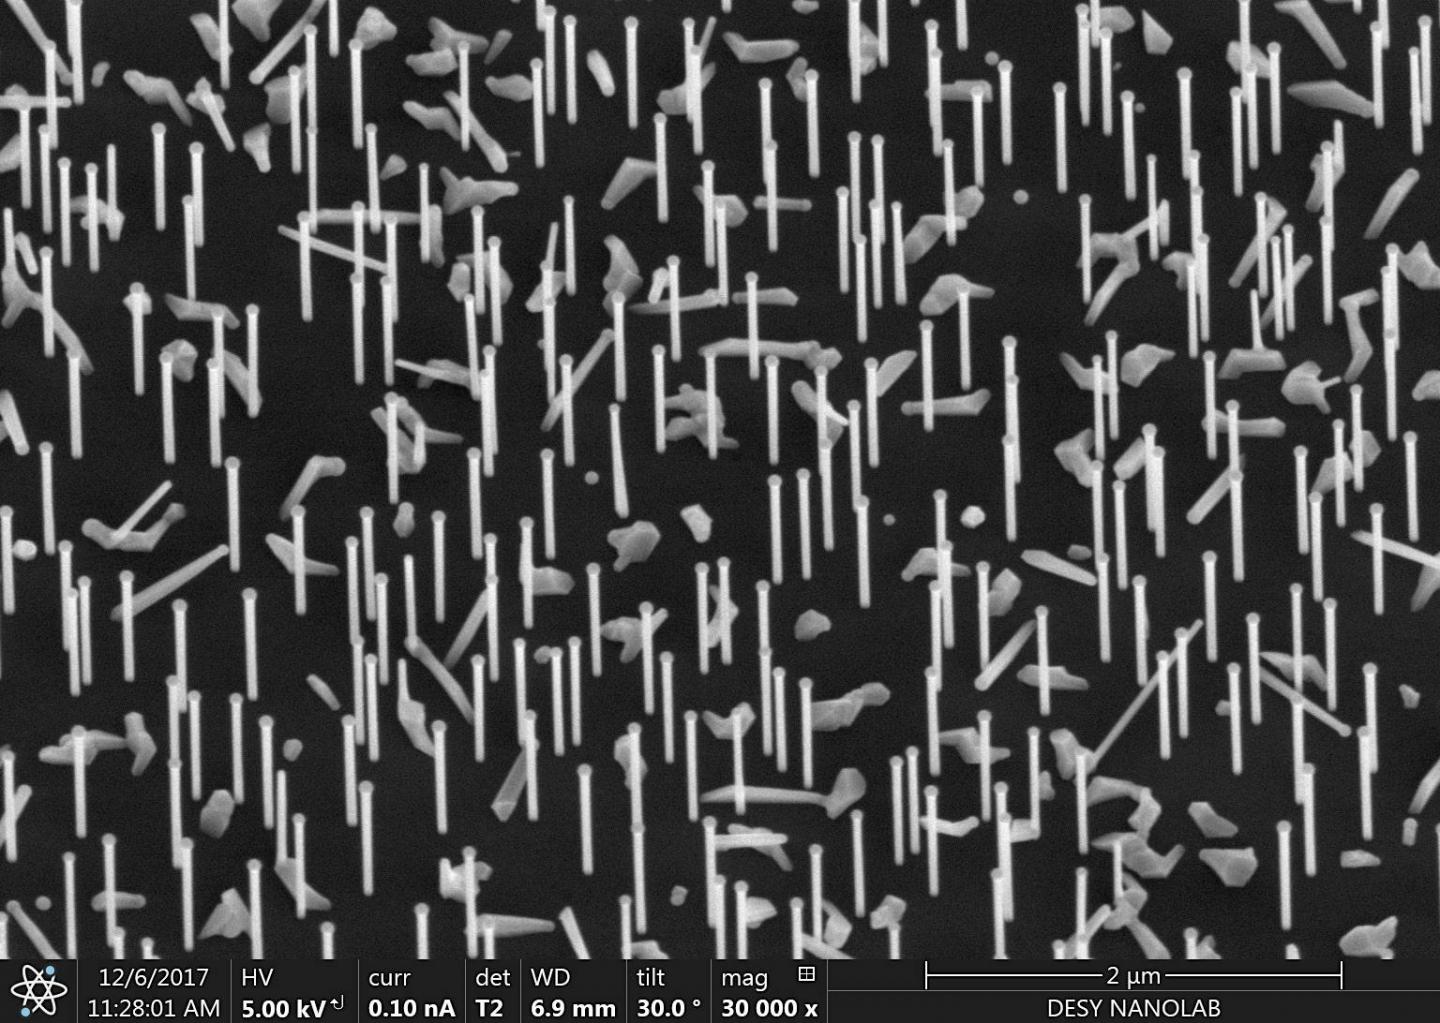 Nanoforest: Nanowires on a Silicon Wafer as Recorded at the DESY NanoLab